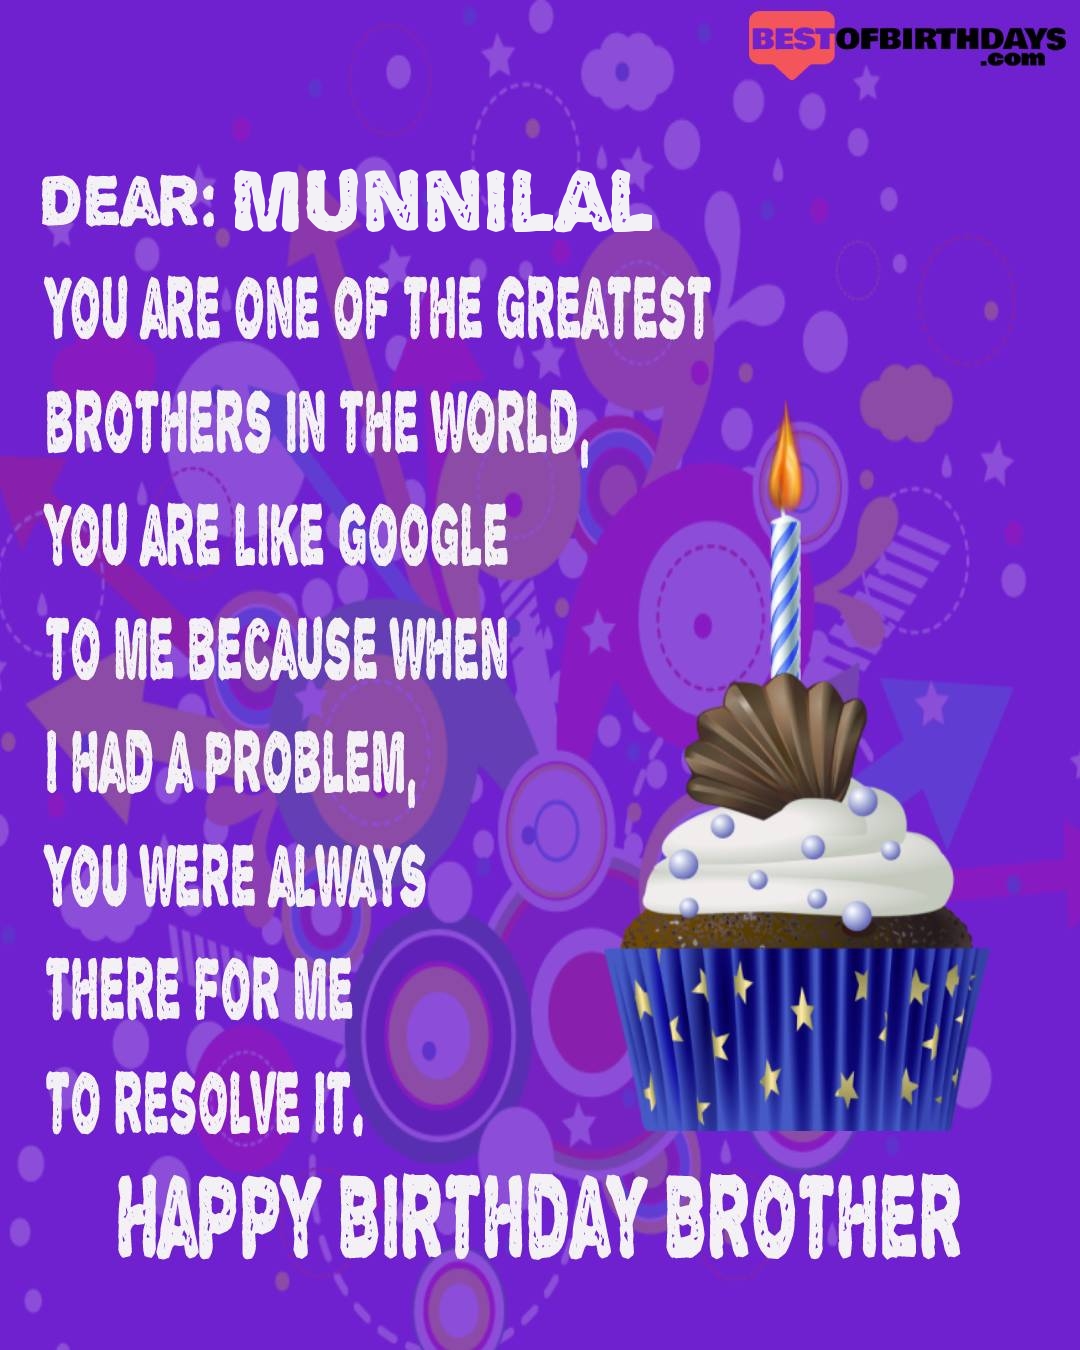 Happy birthday munnilal bhai brother bro